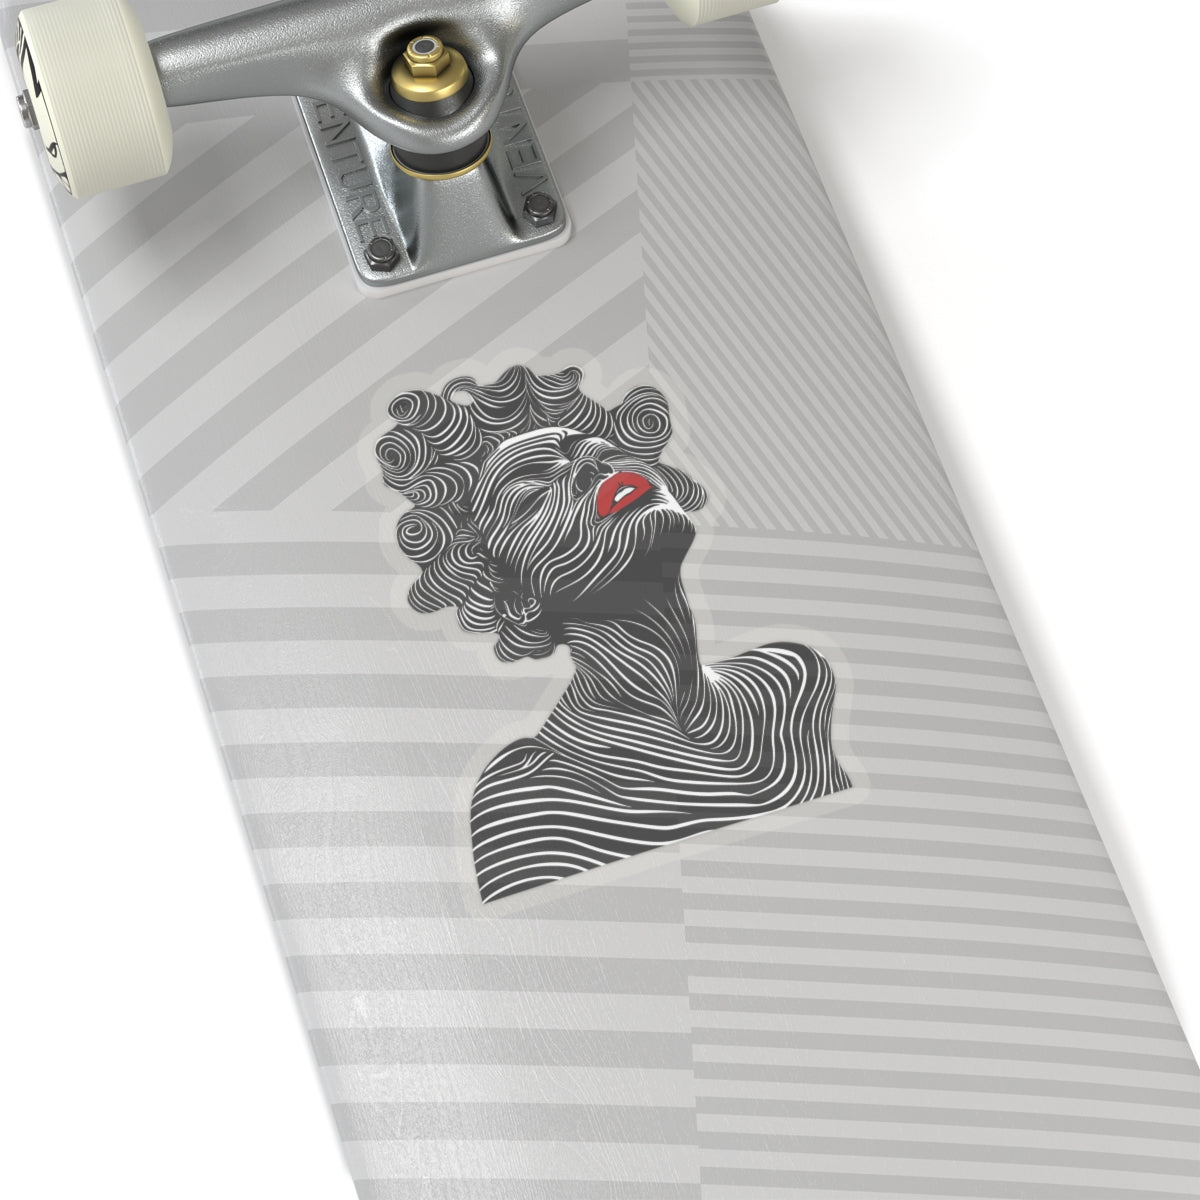 Transparent edge Bantu Knots sticker on skateboard.